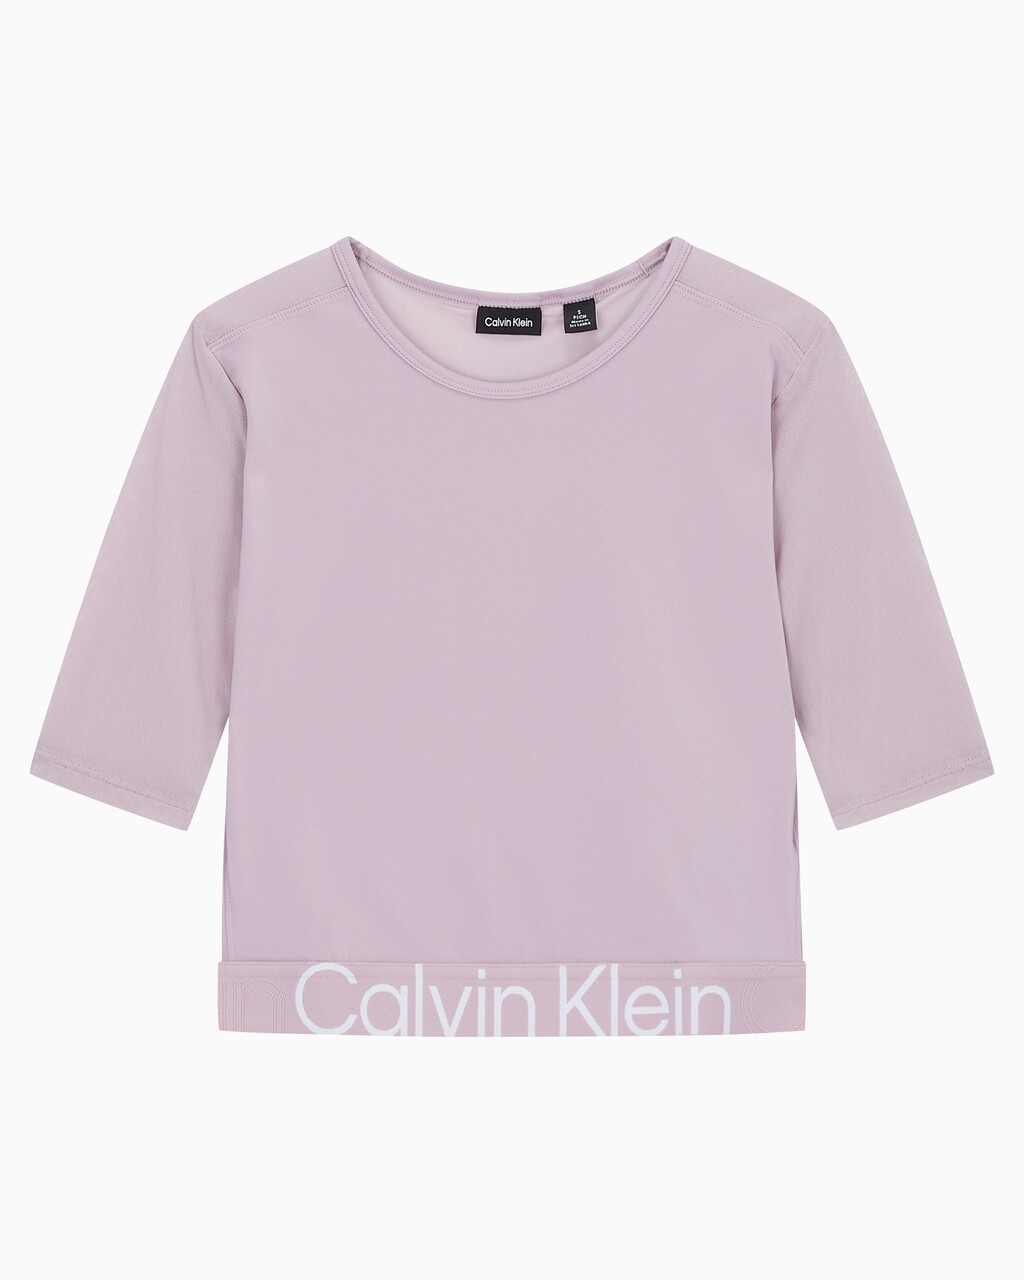 Buy 여성 레귤러 핏 스트레치 기능성 크롭 반팔 티셔츠 in color GRAY ROSE